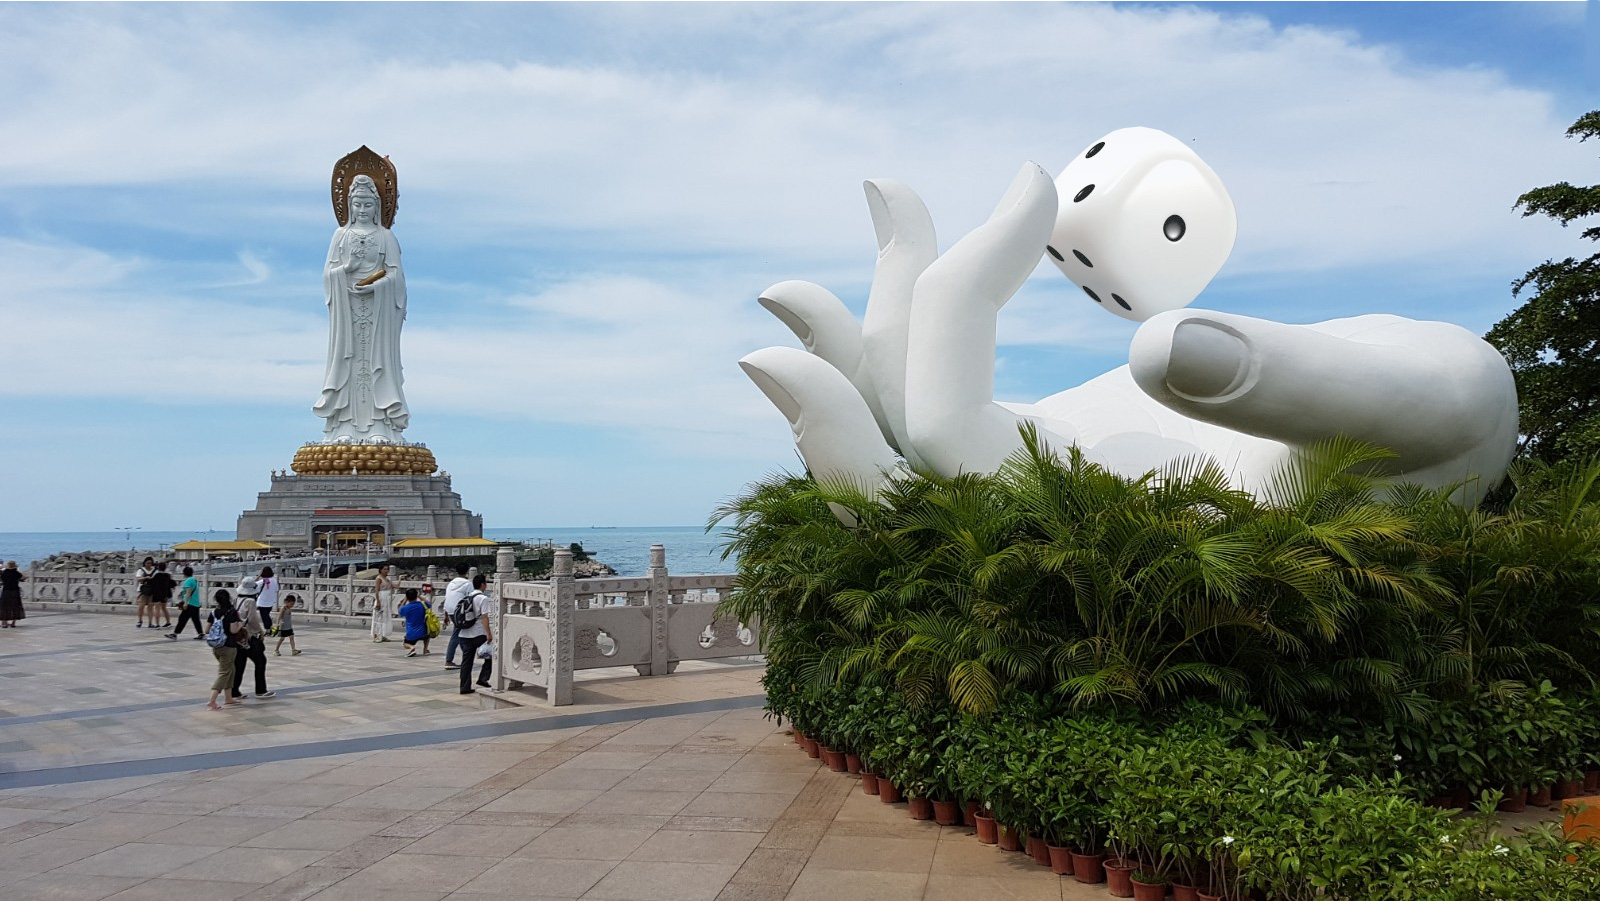 Hainan gambling won’t leave Macau’s financial well dry